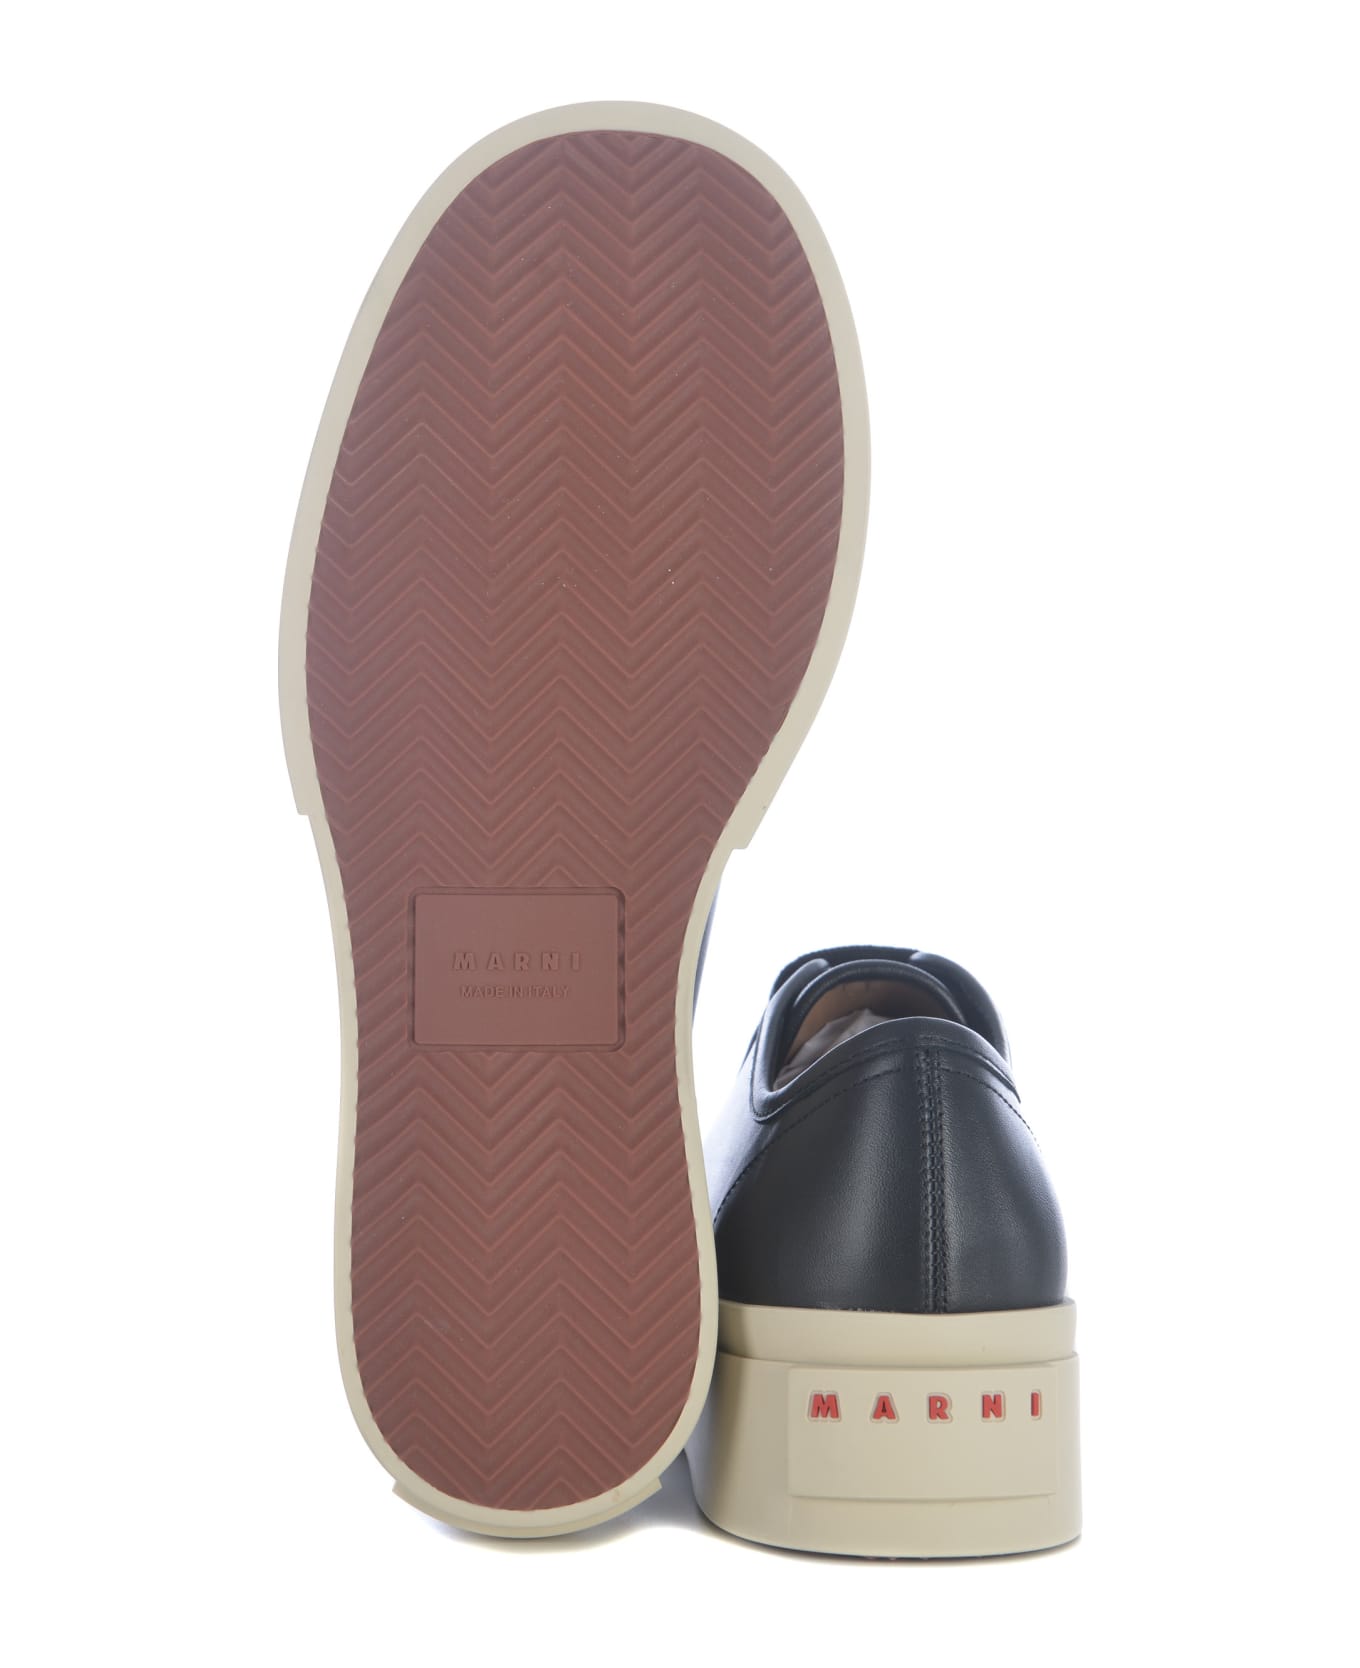 Marni Sneakers Marni "pablo" Made Of Nappa - Nero スニーカー